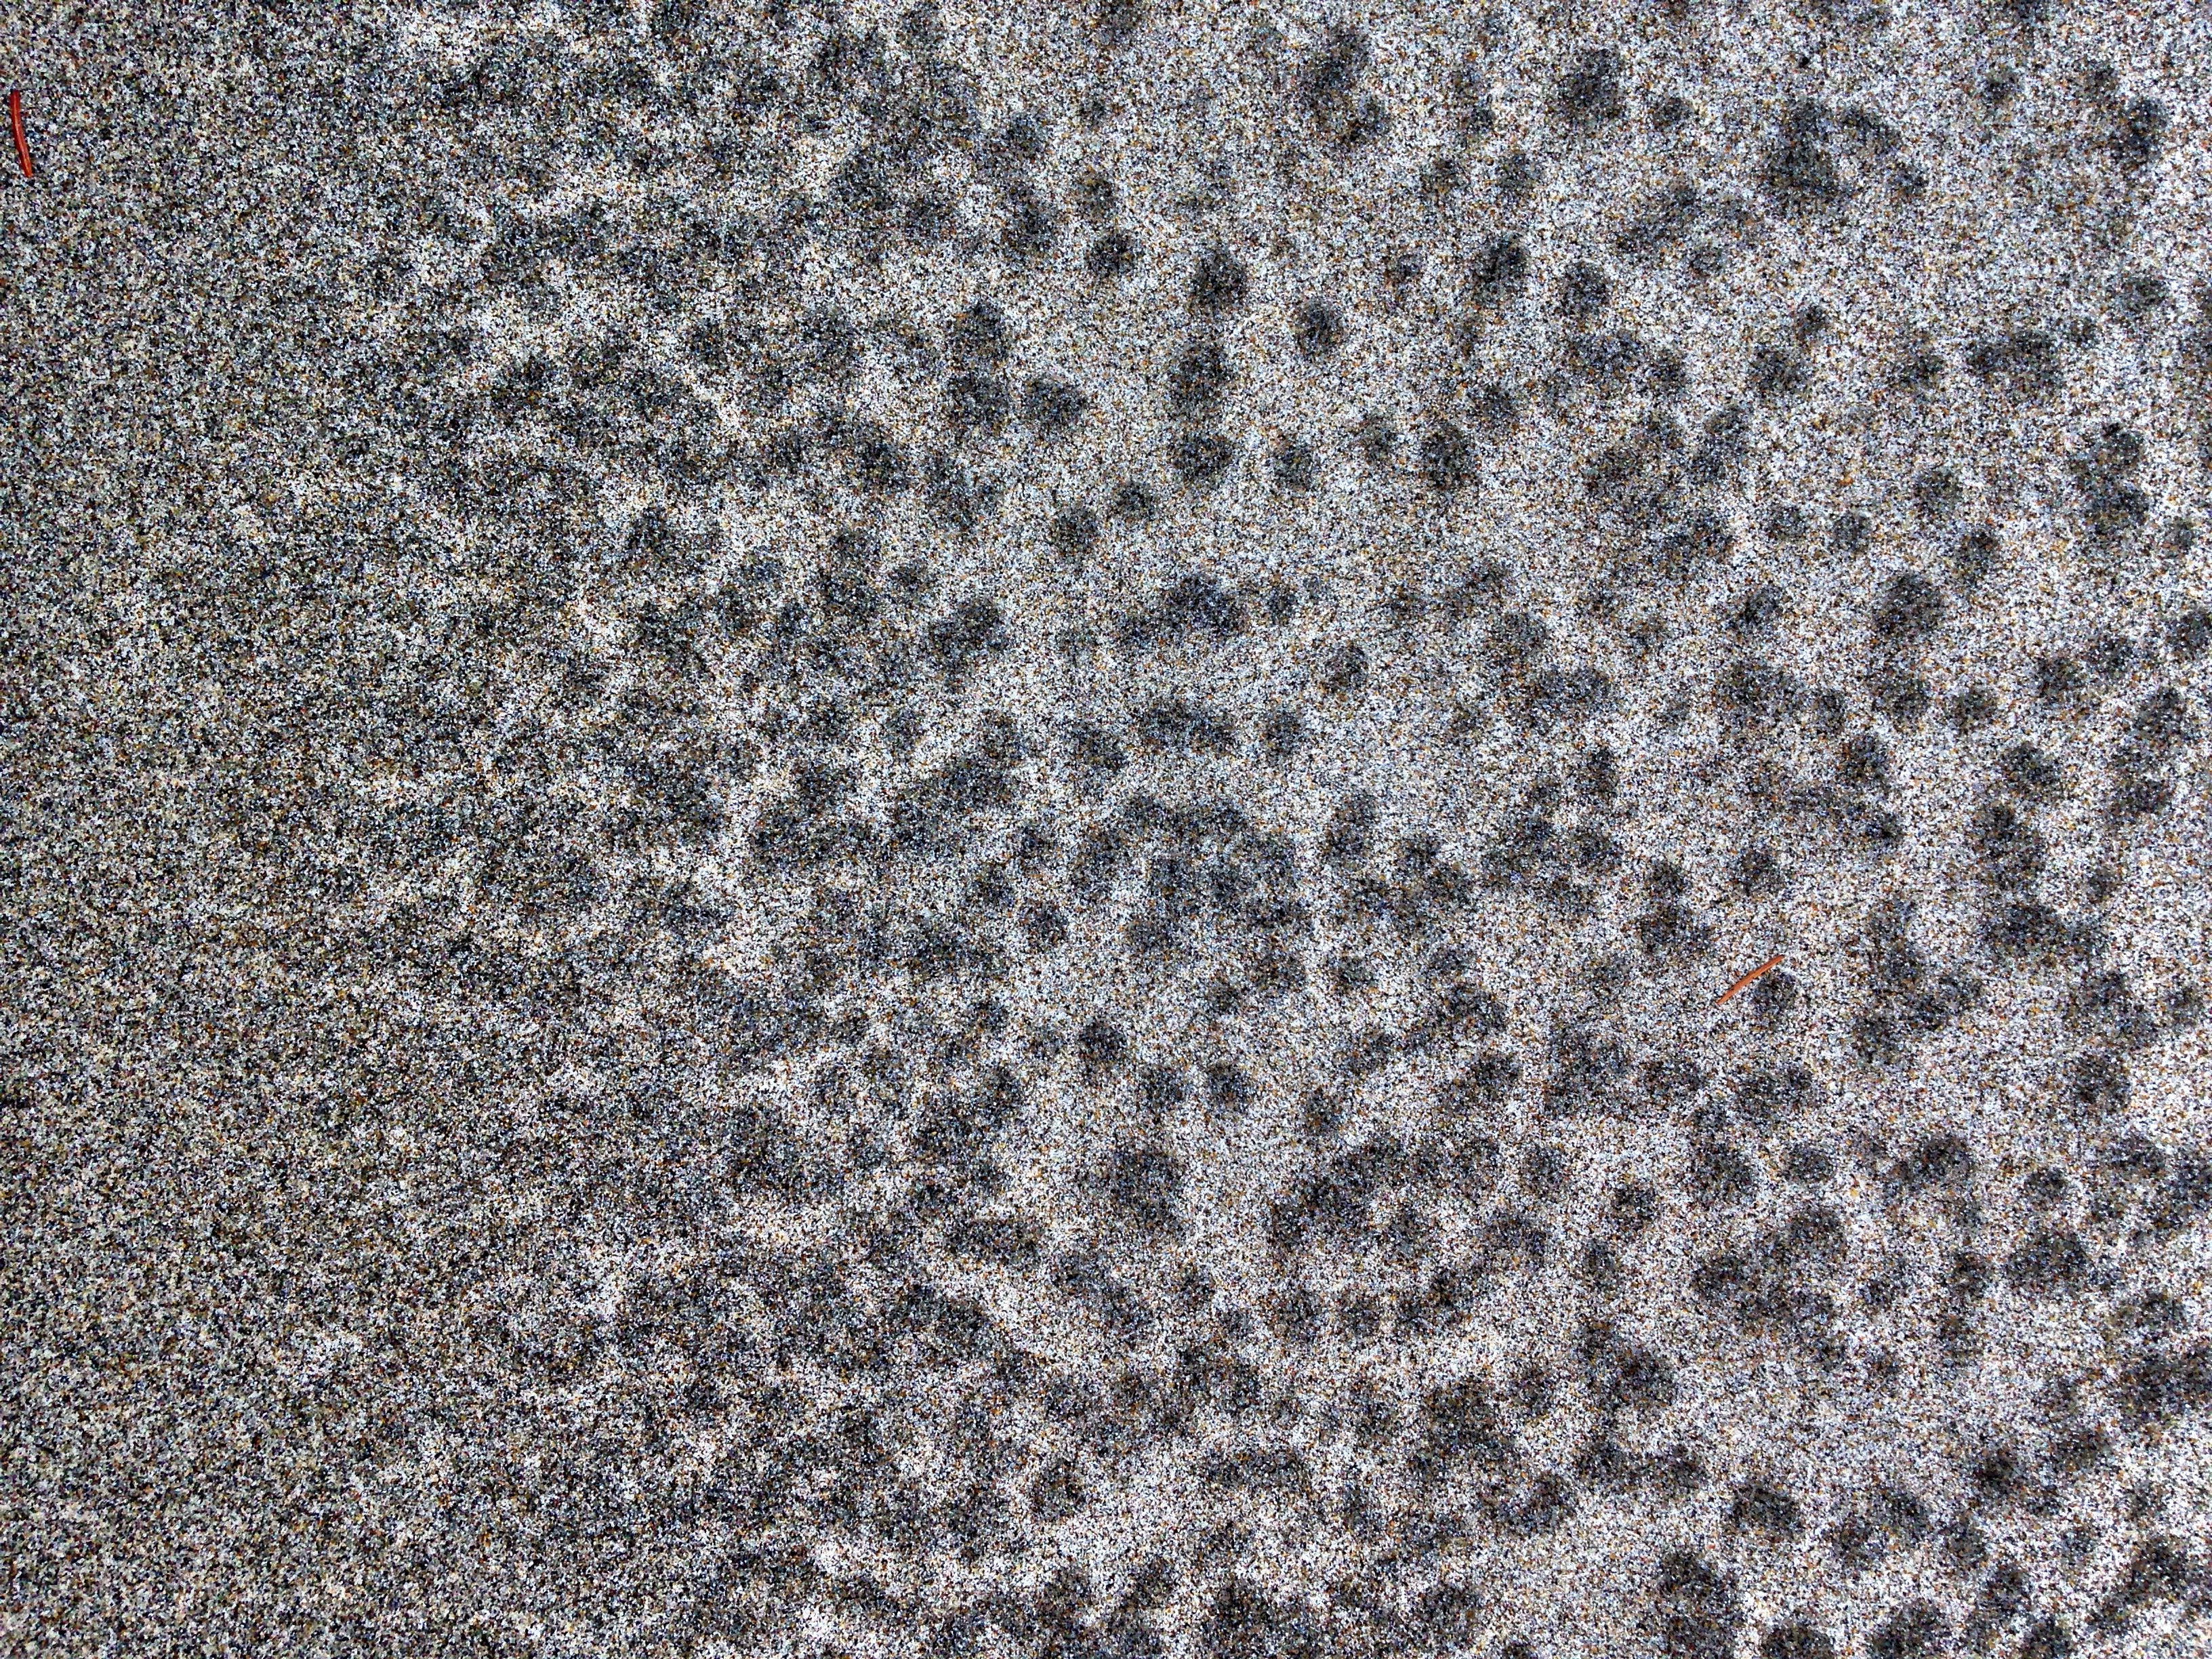 Stippled sand patterns on the Oregon coast